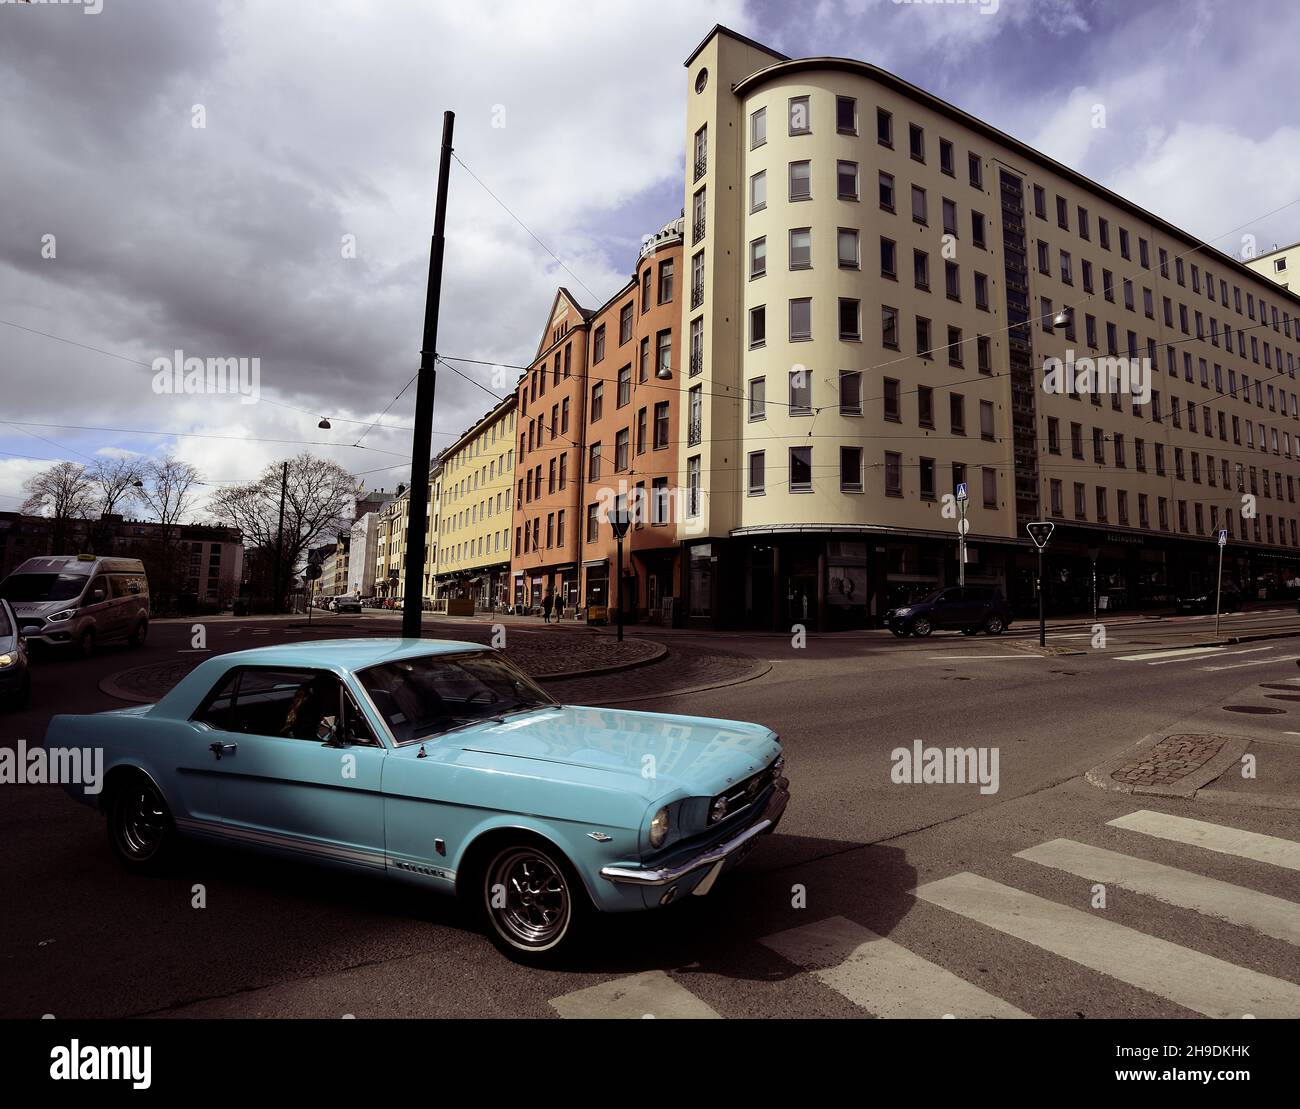 Helsinki, Finnland – 29. April 2021: Oldtimer-Mustang-Wagen auf der Straße von Helsinki, Finnland Stockfoto